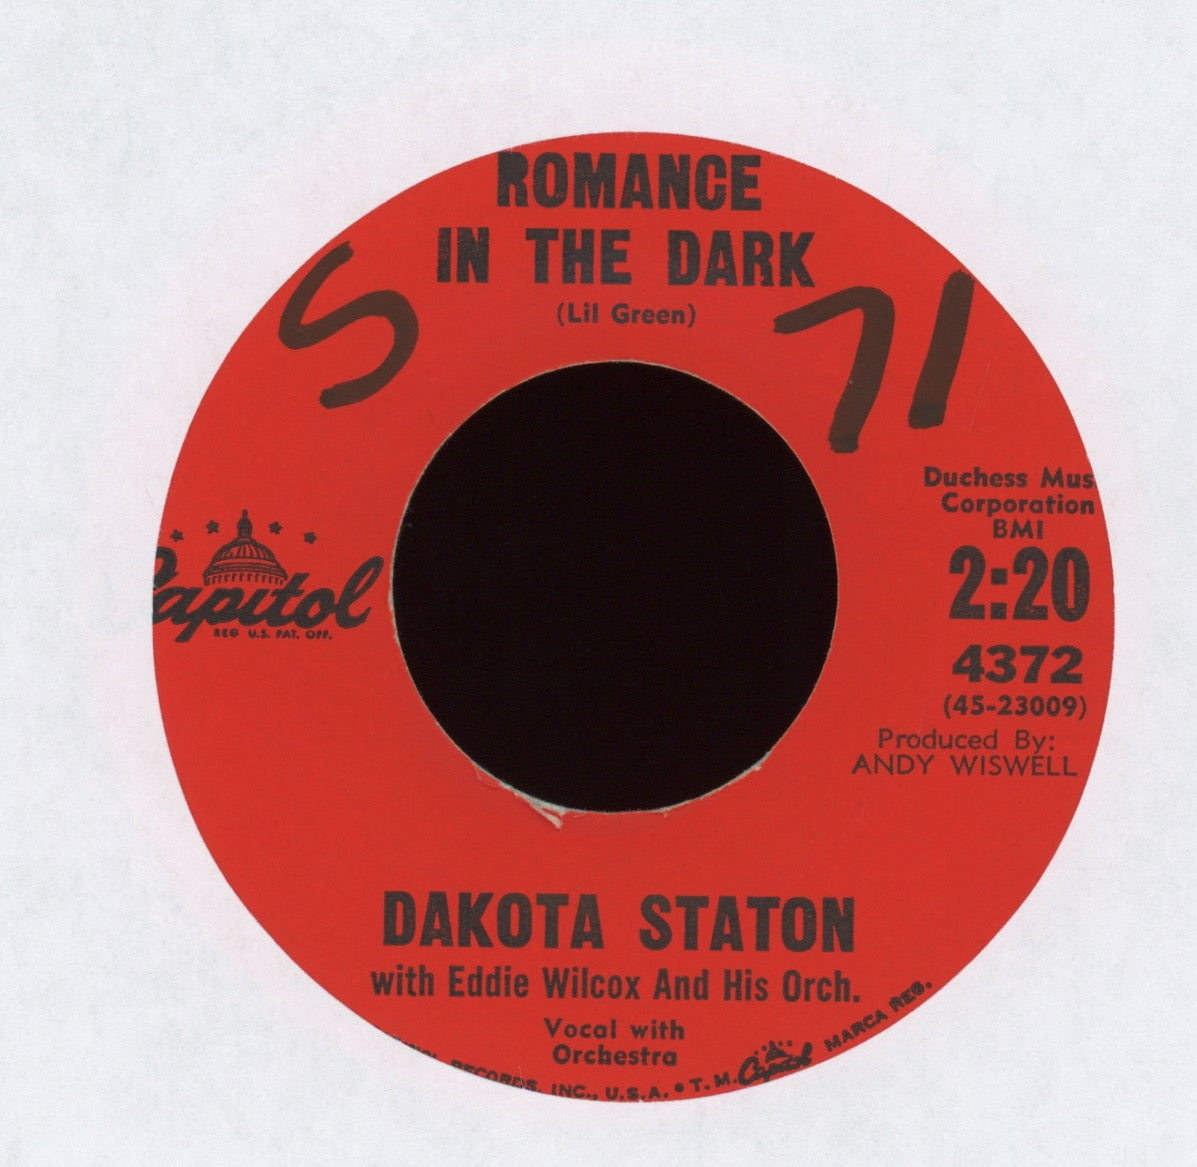 Dakota Staton - My Babe on Capitol R&B 45